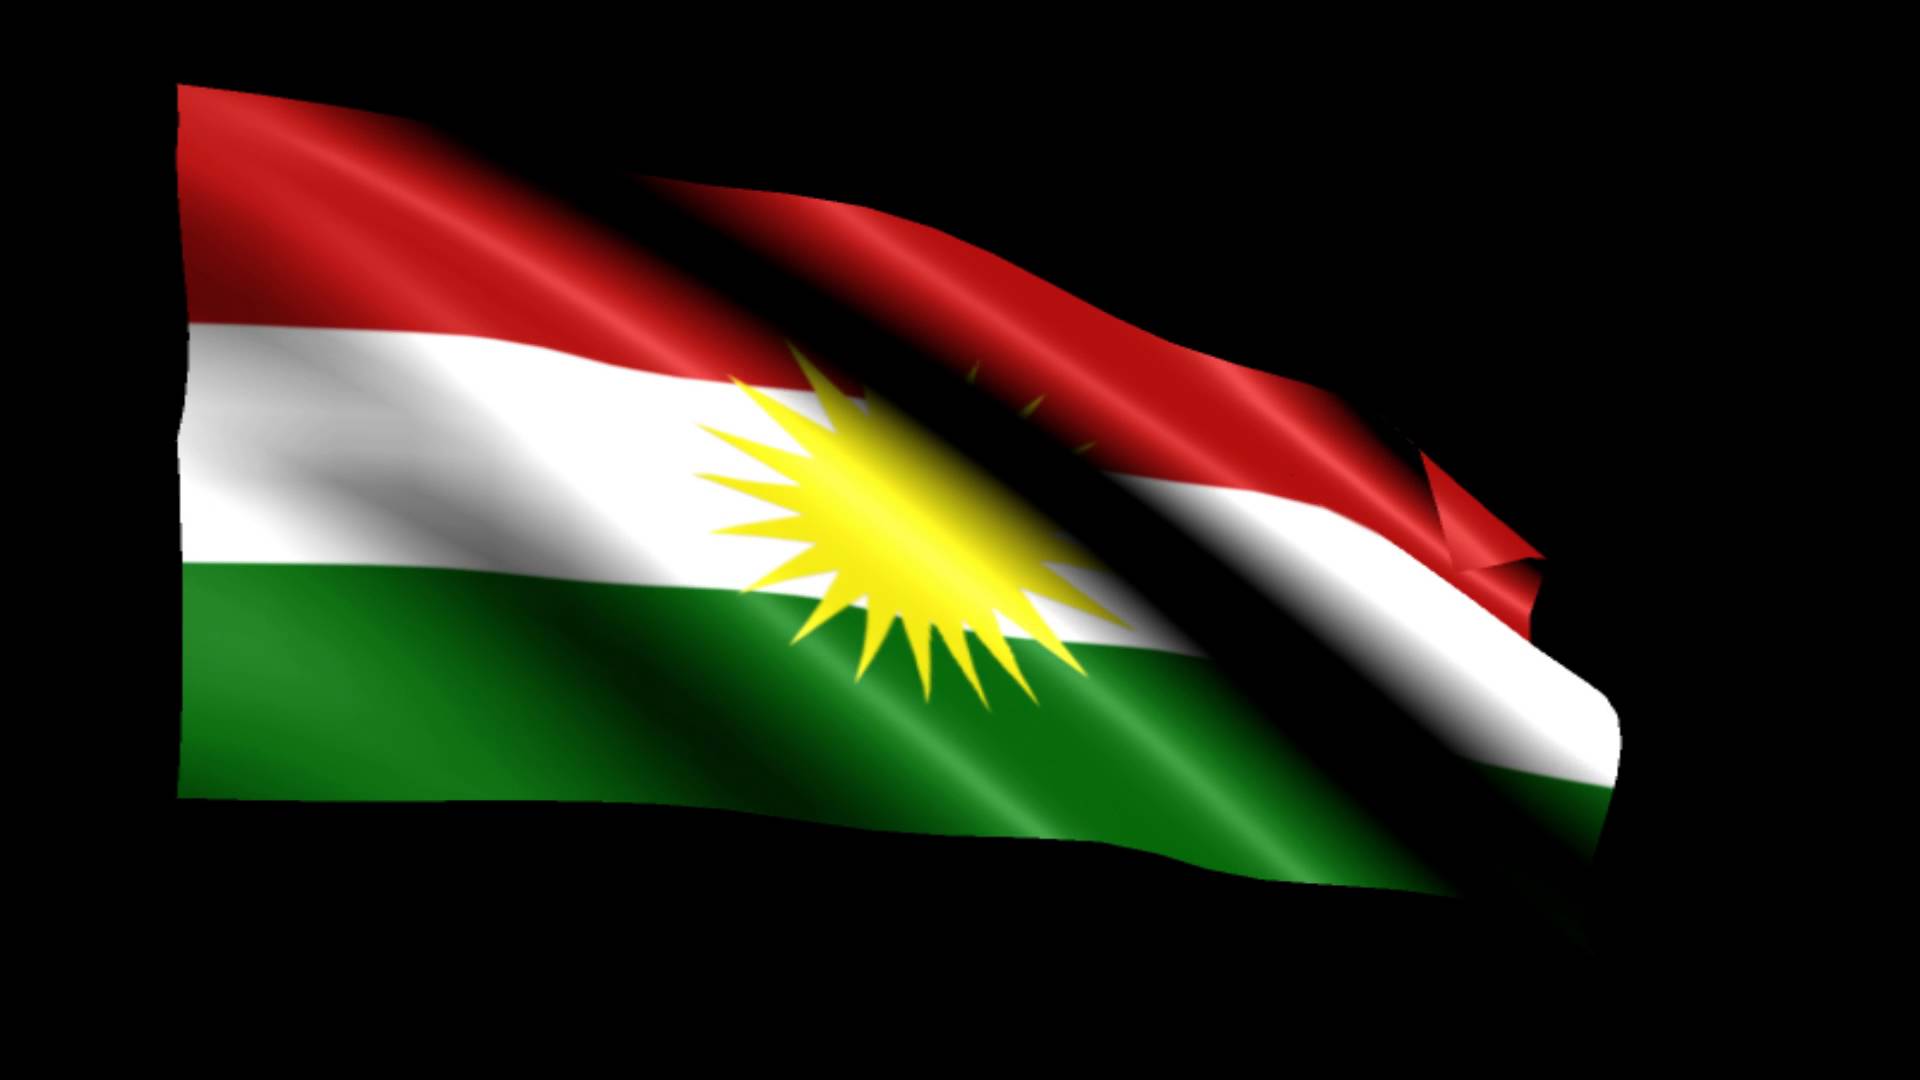 kurdistan flag alpha chanel for free use